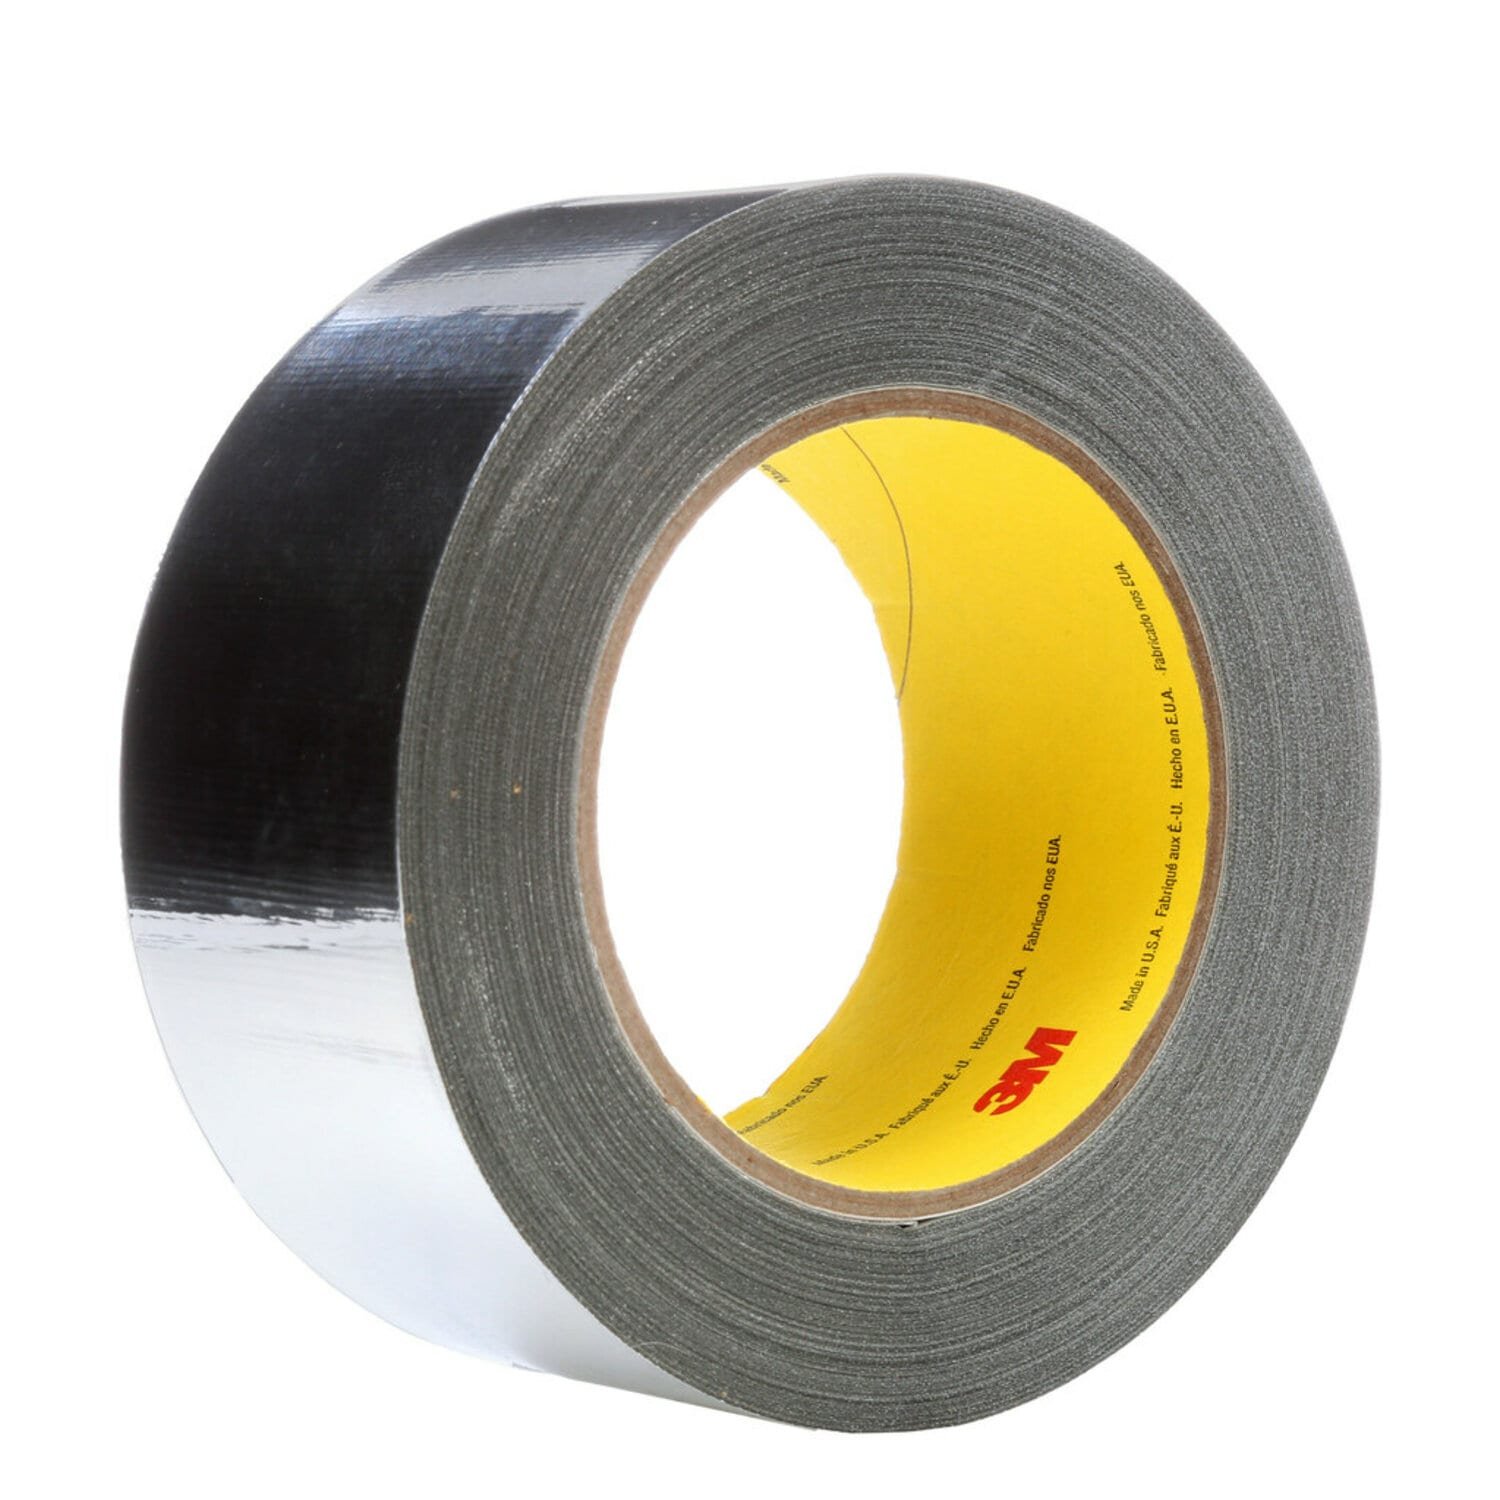 7100196624 - 3M High Temperature Aluminum Foil/Glass Cloth Tape 363, Silver, 4 in x
36 yd, Roll